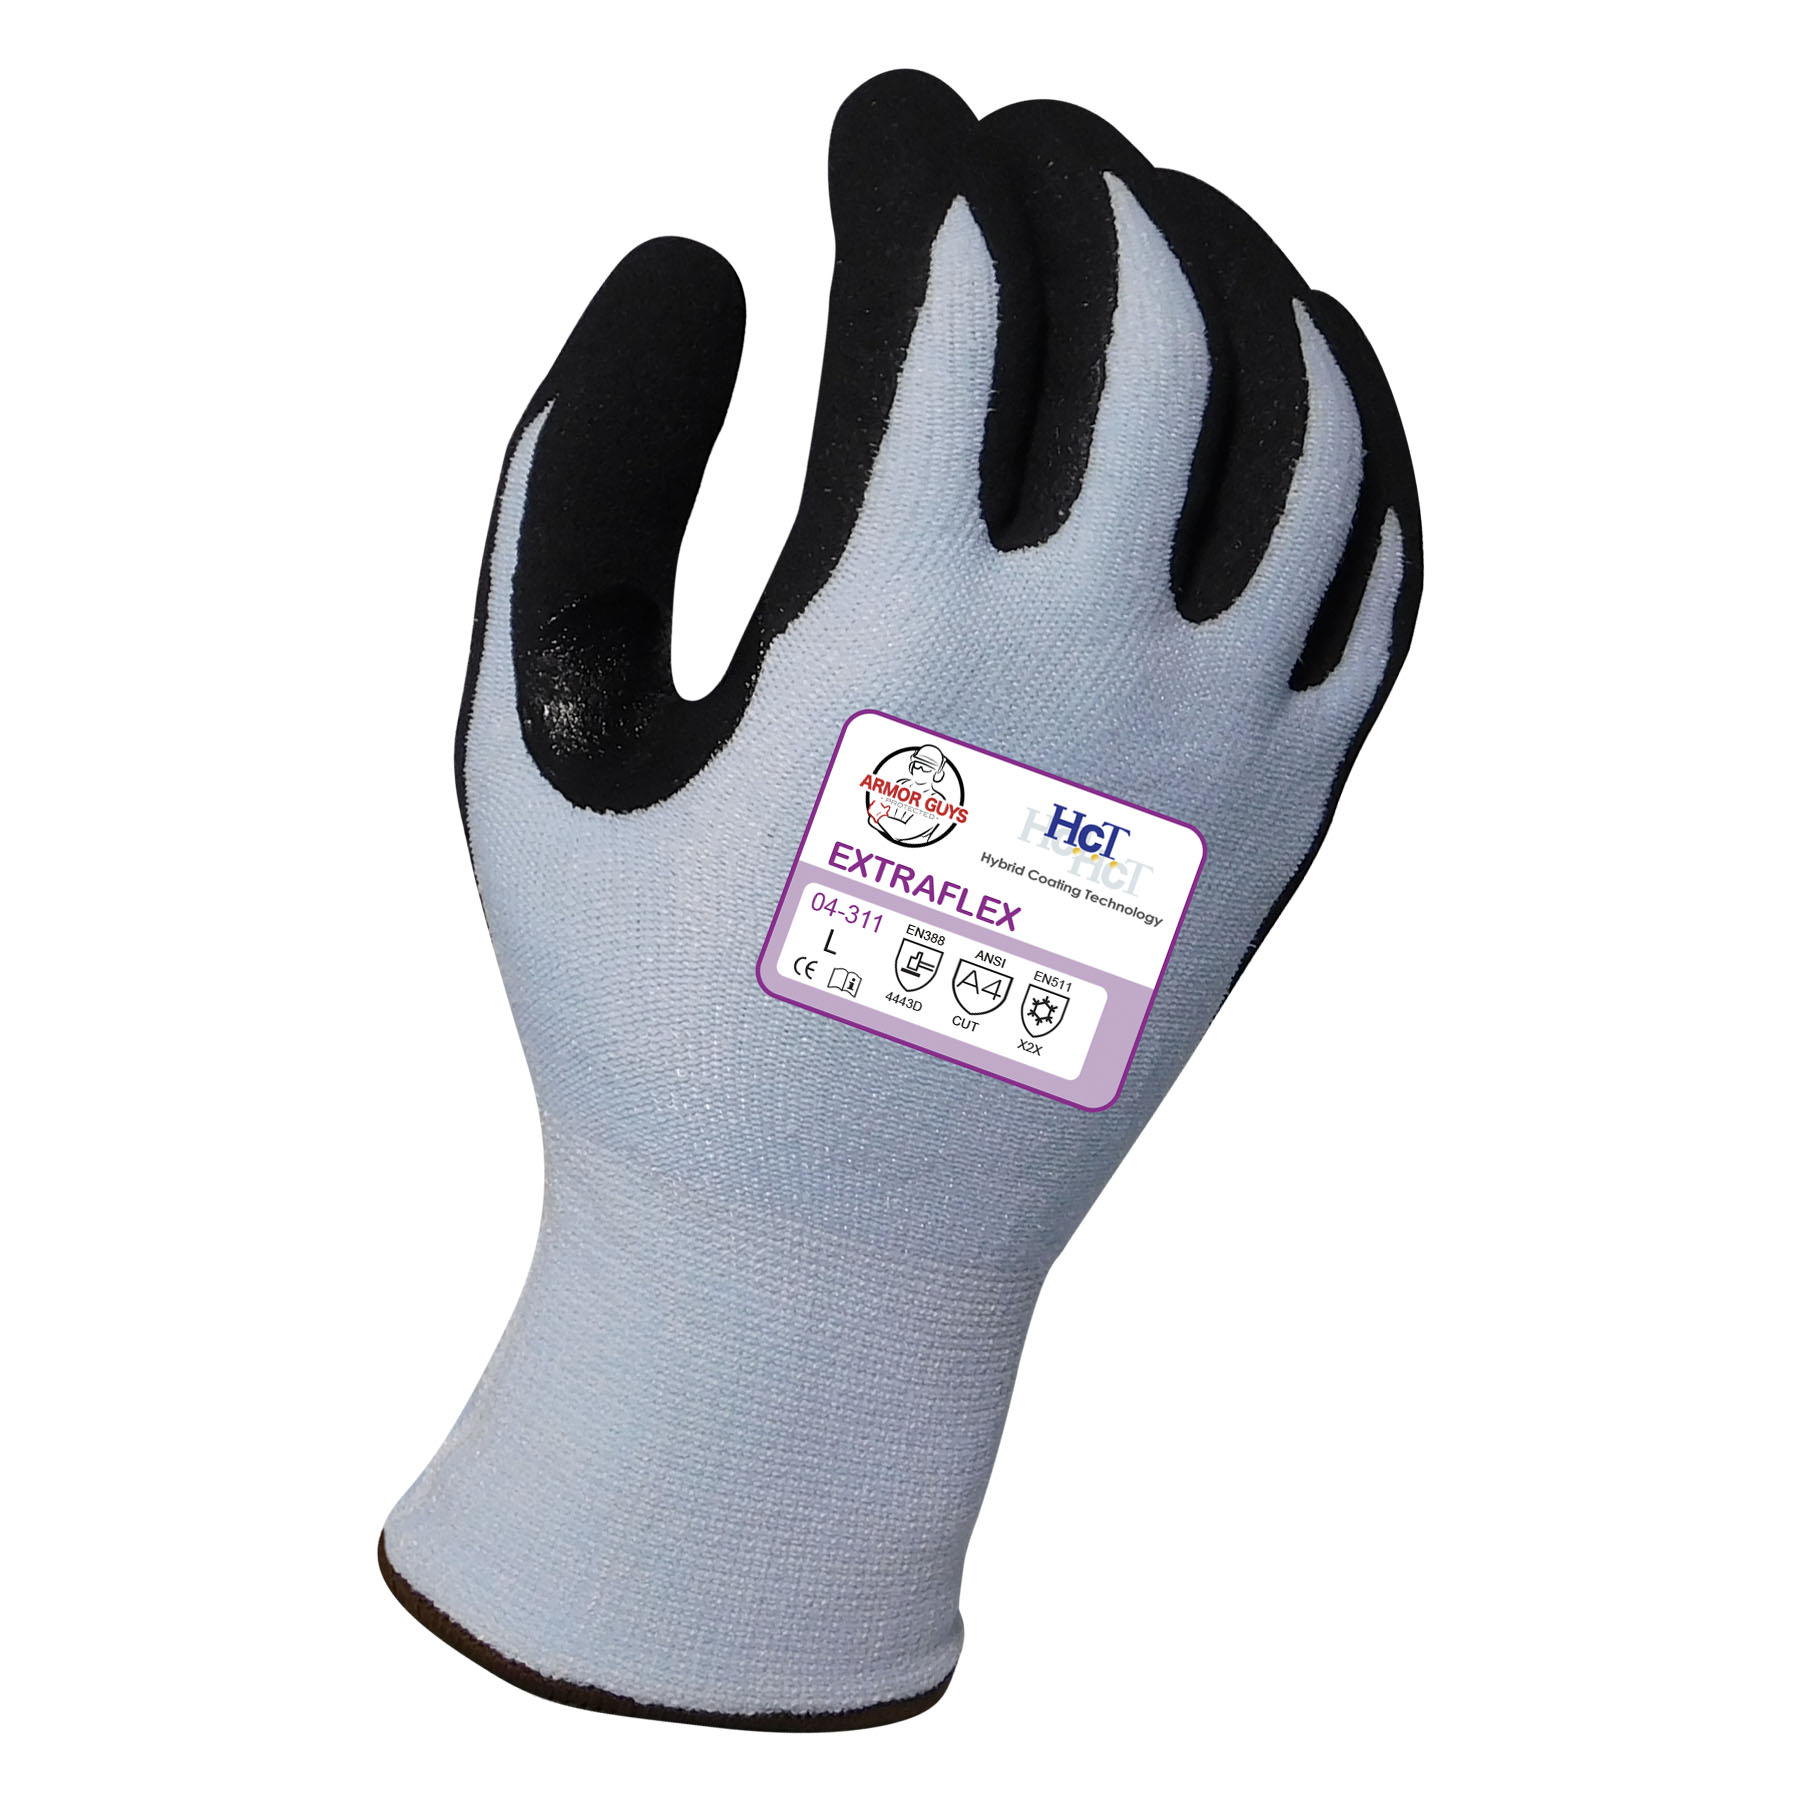 Armor Guys Extraflex Gloves